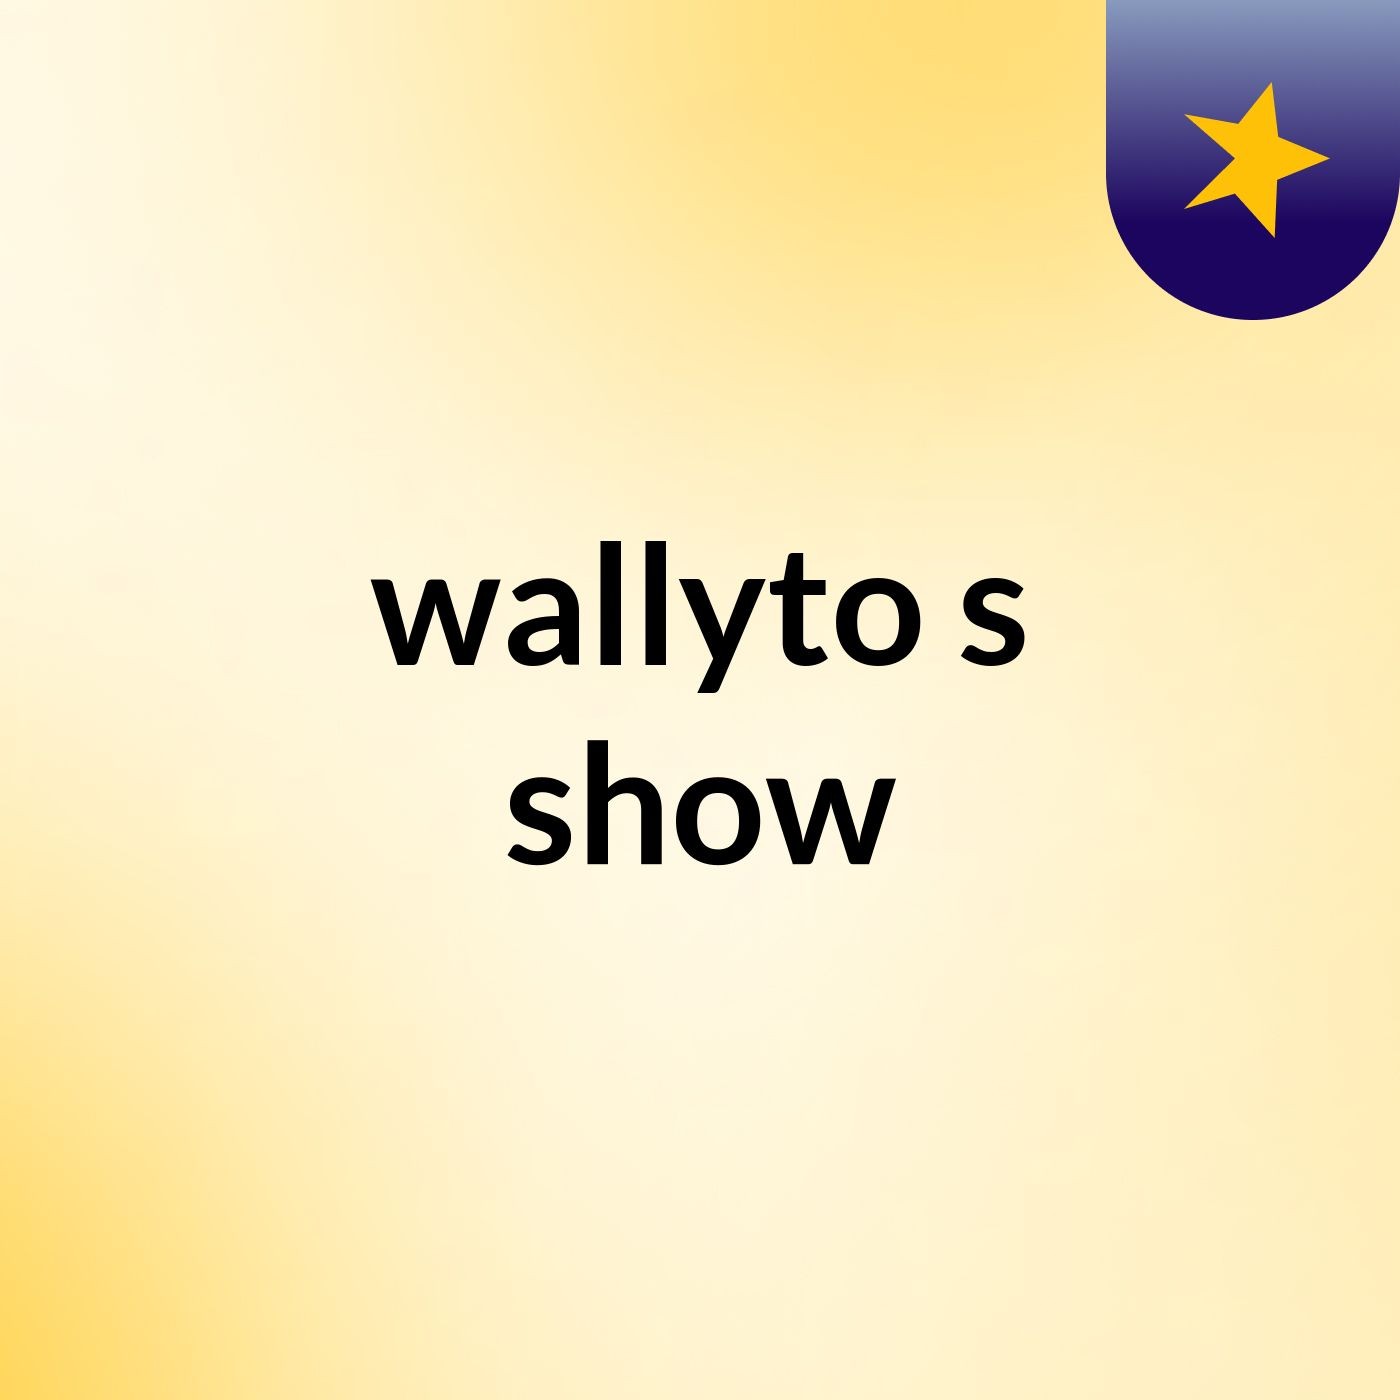 wallyto's show